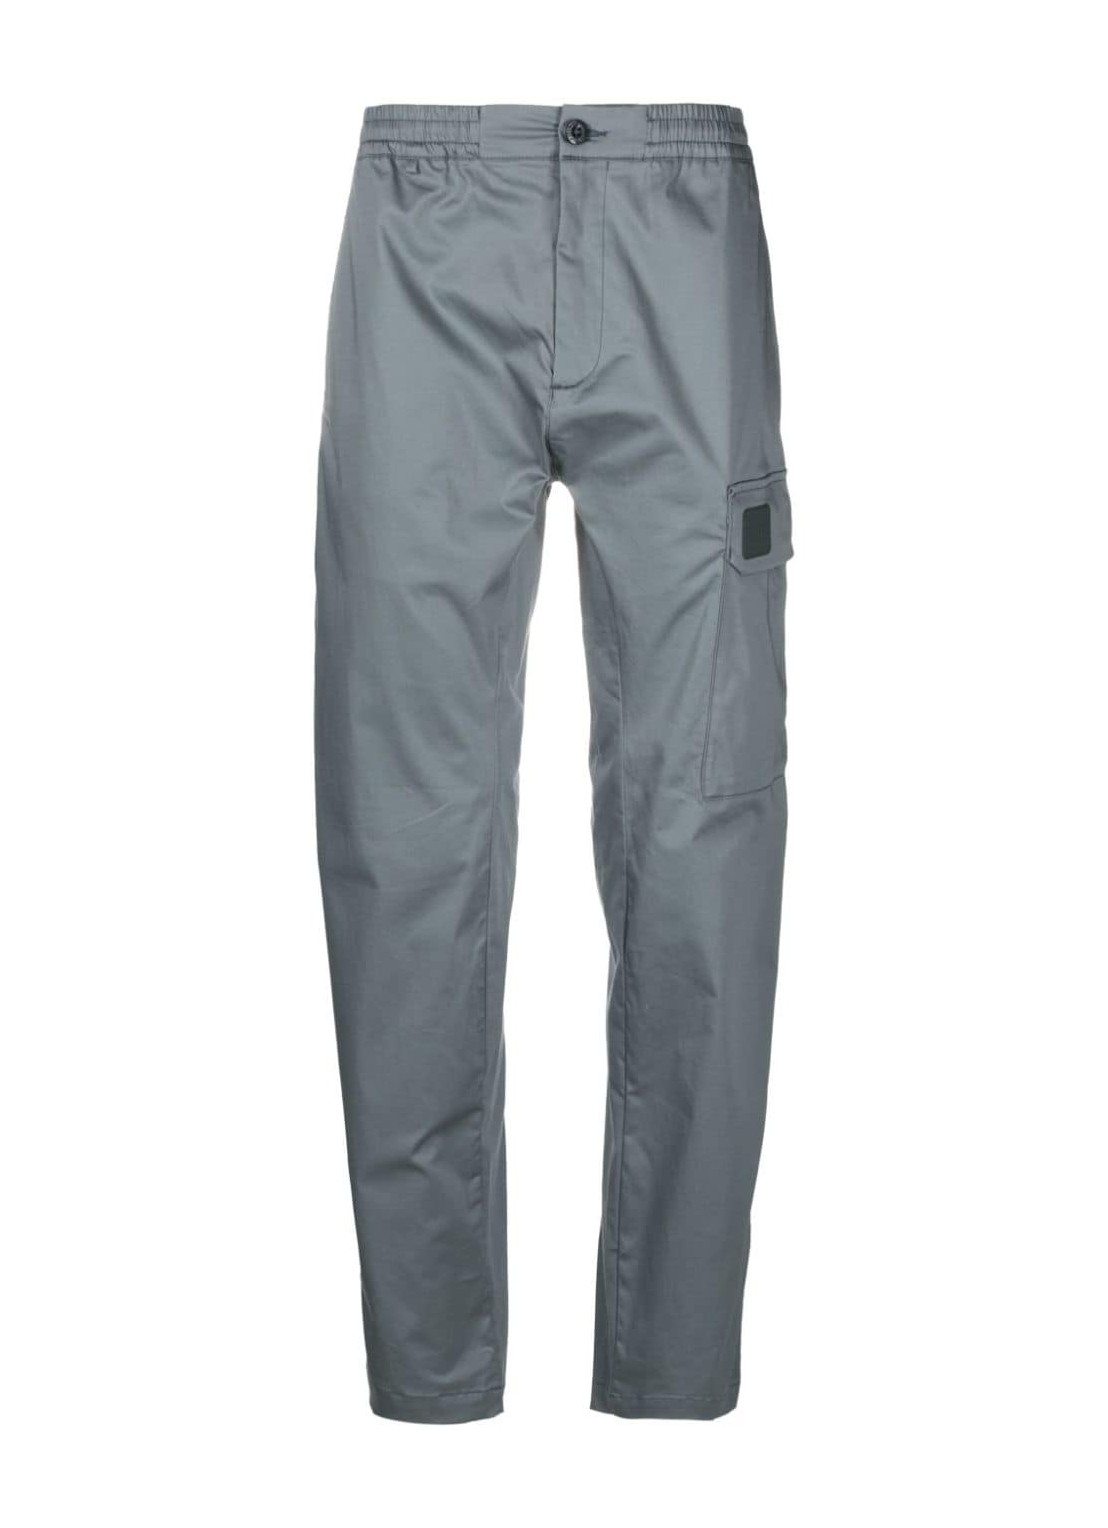 Pantalon c.p.company pant  manmetropolis series stretch sateen regular utility pants - 16clpa036a110